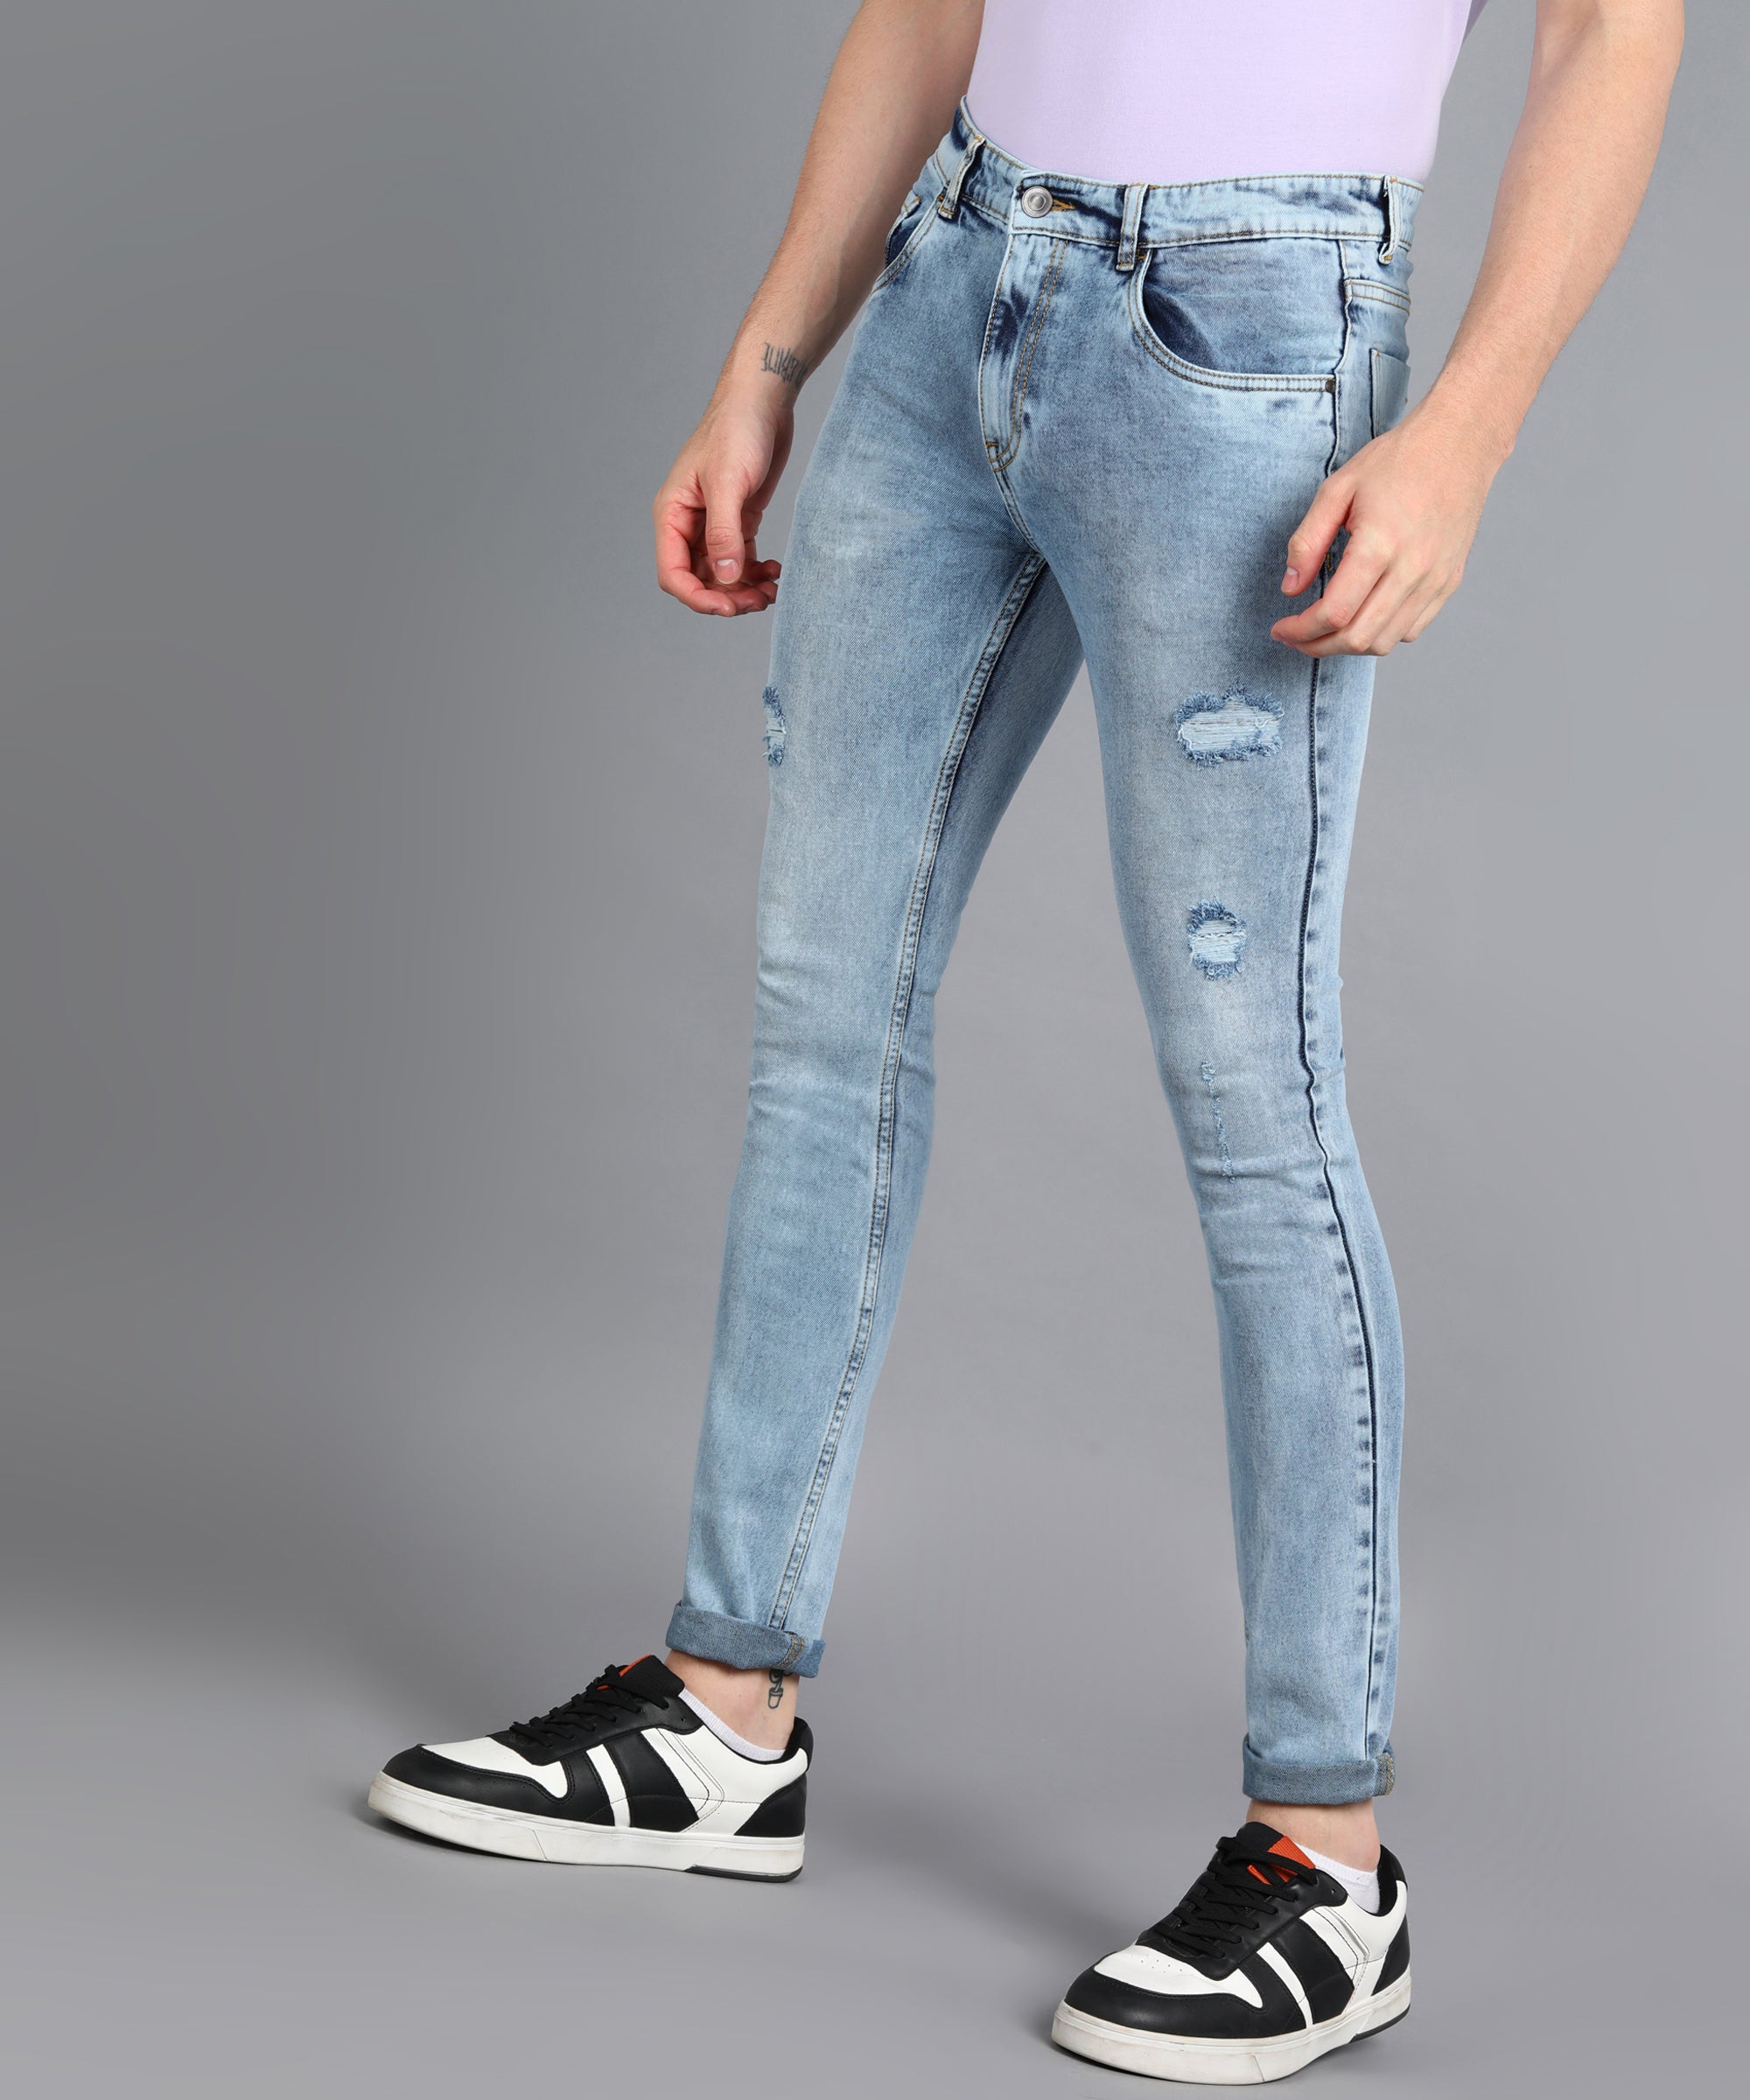 Men's Sky Blue Skinny Fit Washed Mild Distressed/Torn Jeans Stretchable